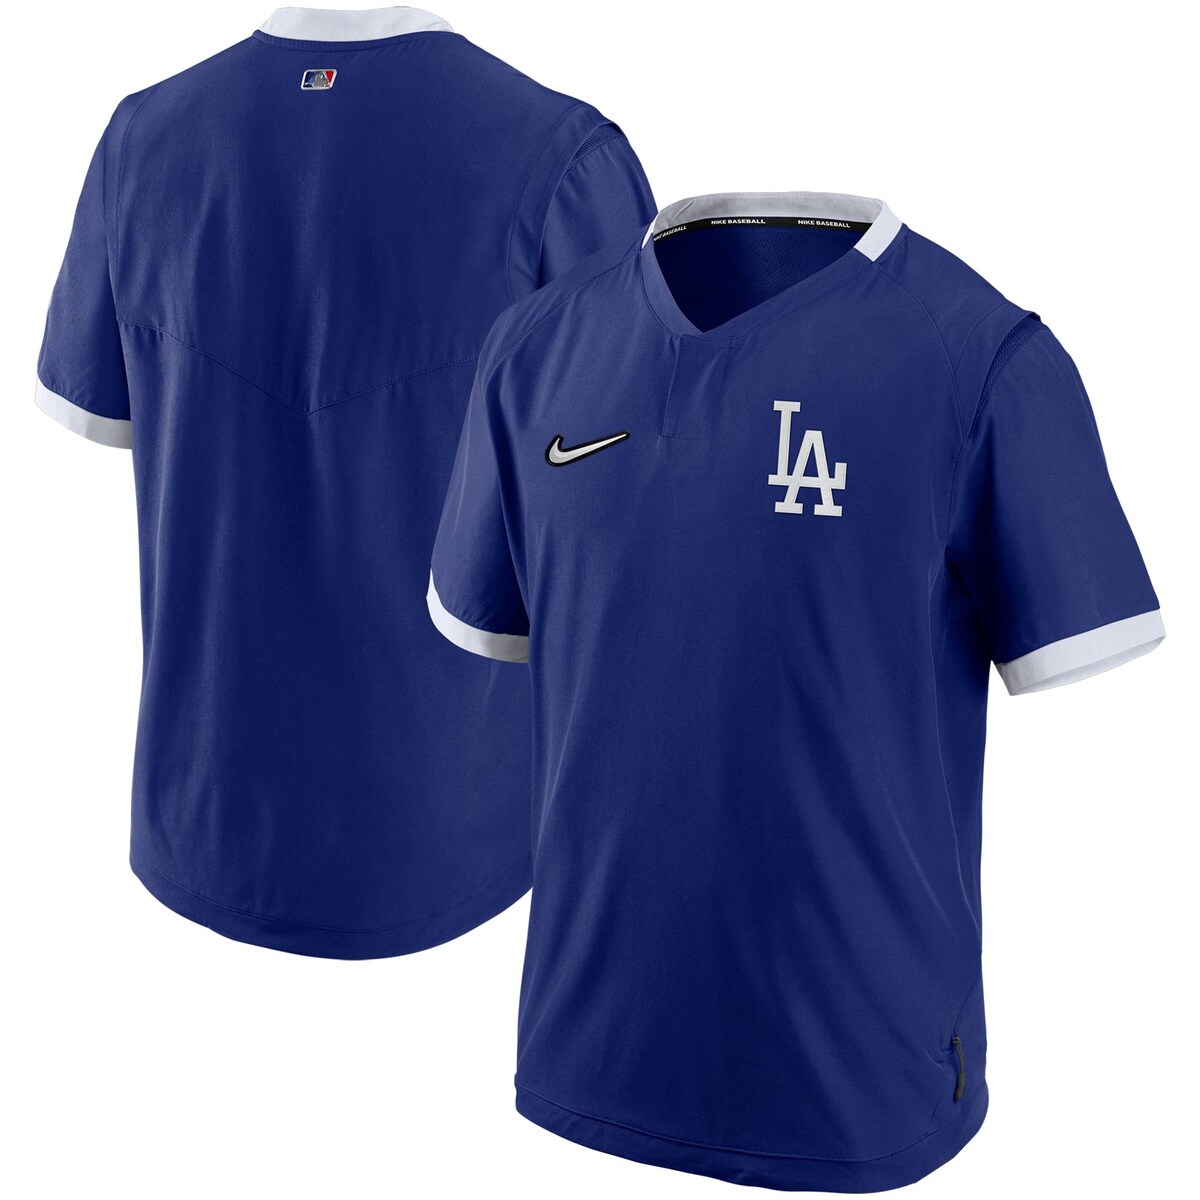 MLB hW[X vI[o[ Nike iCL Y C (Men's Nike 2020 Authentic Baseball Hot Jacket)